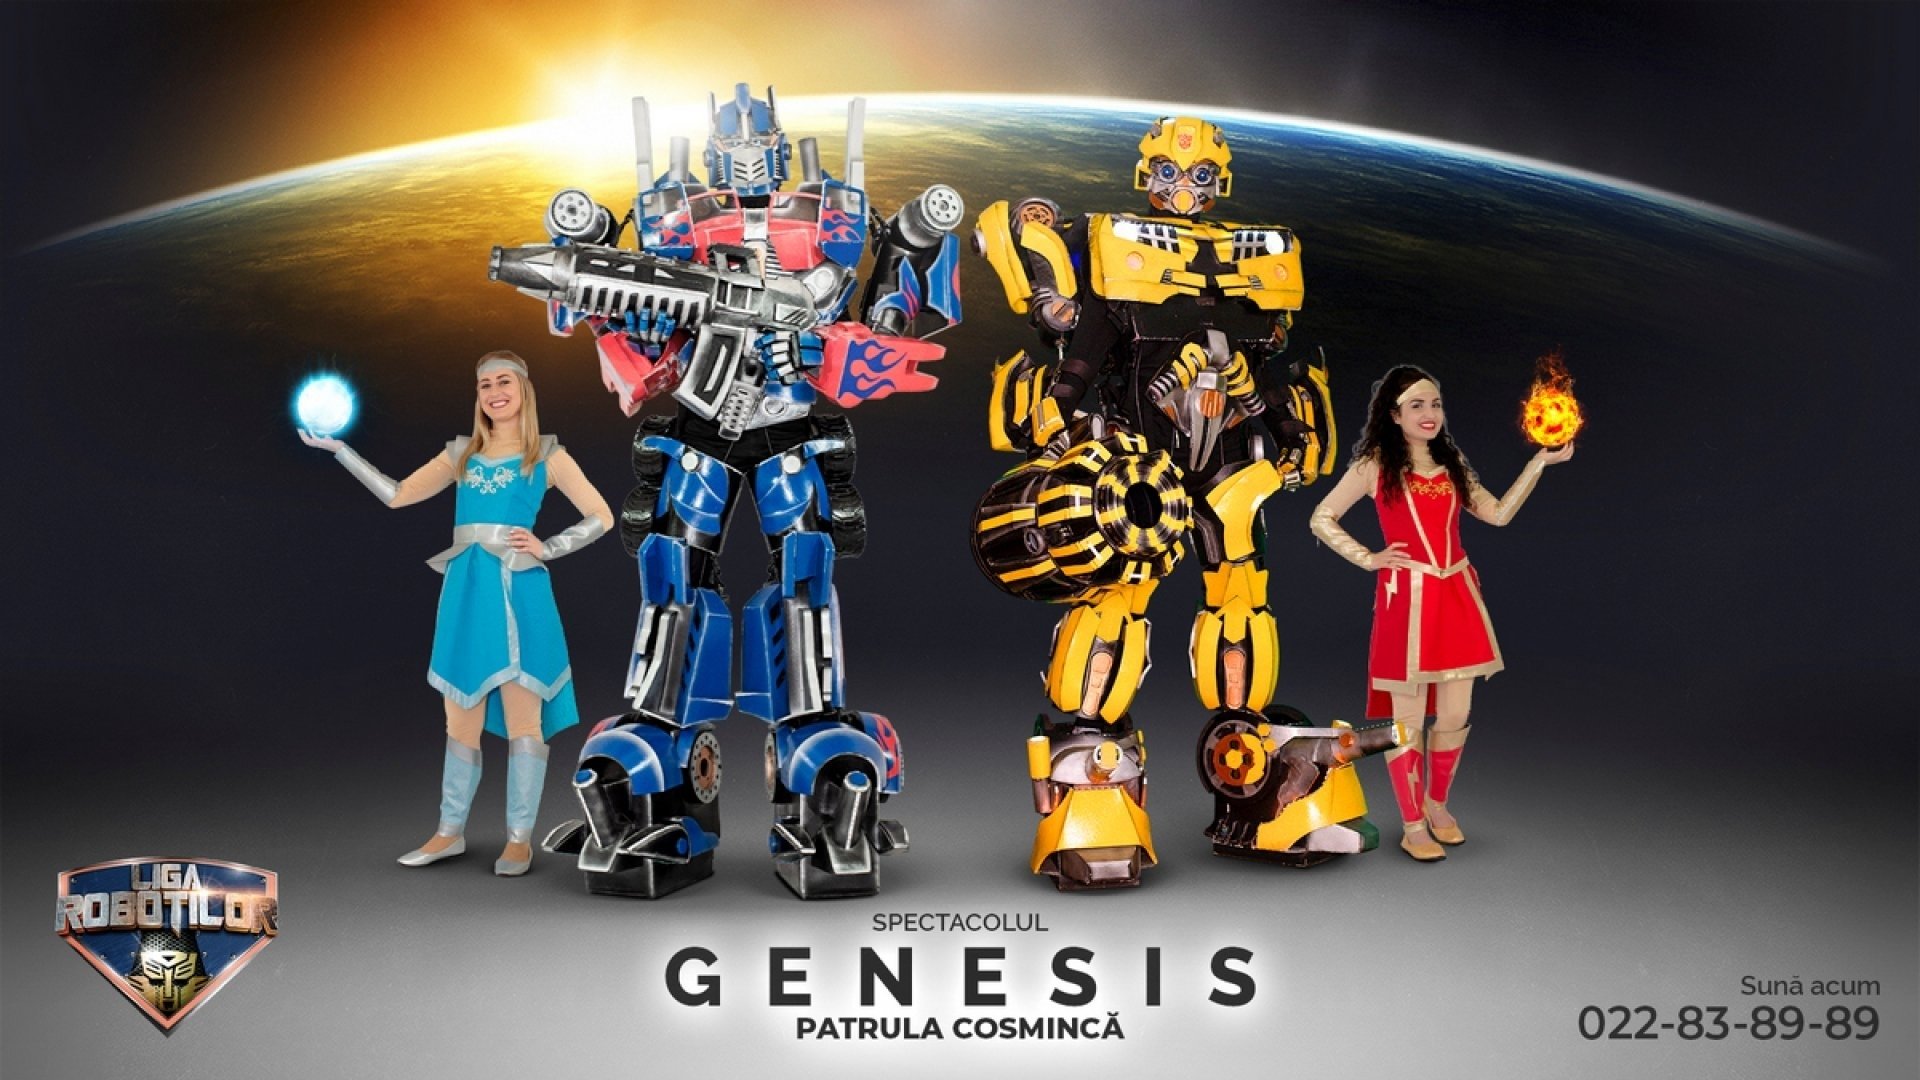 Genesis - Calatorie in Sistemul Solar | Spectacol Interactiv de Animatie pentru copii | August 2022